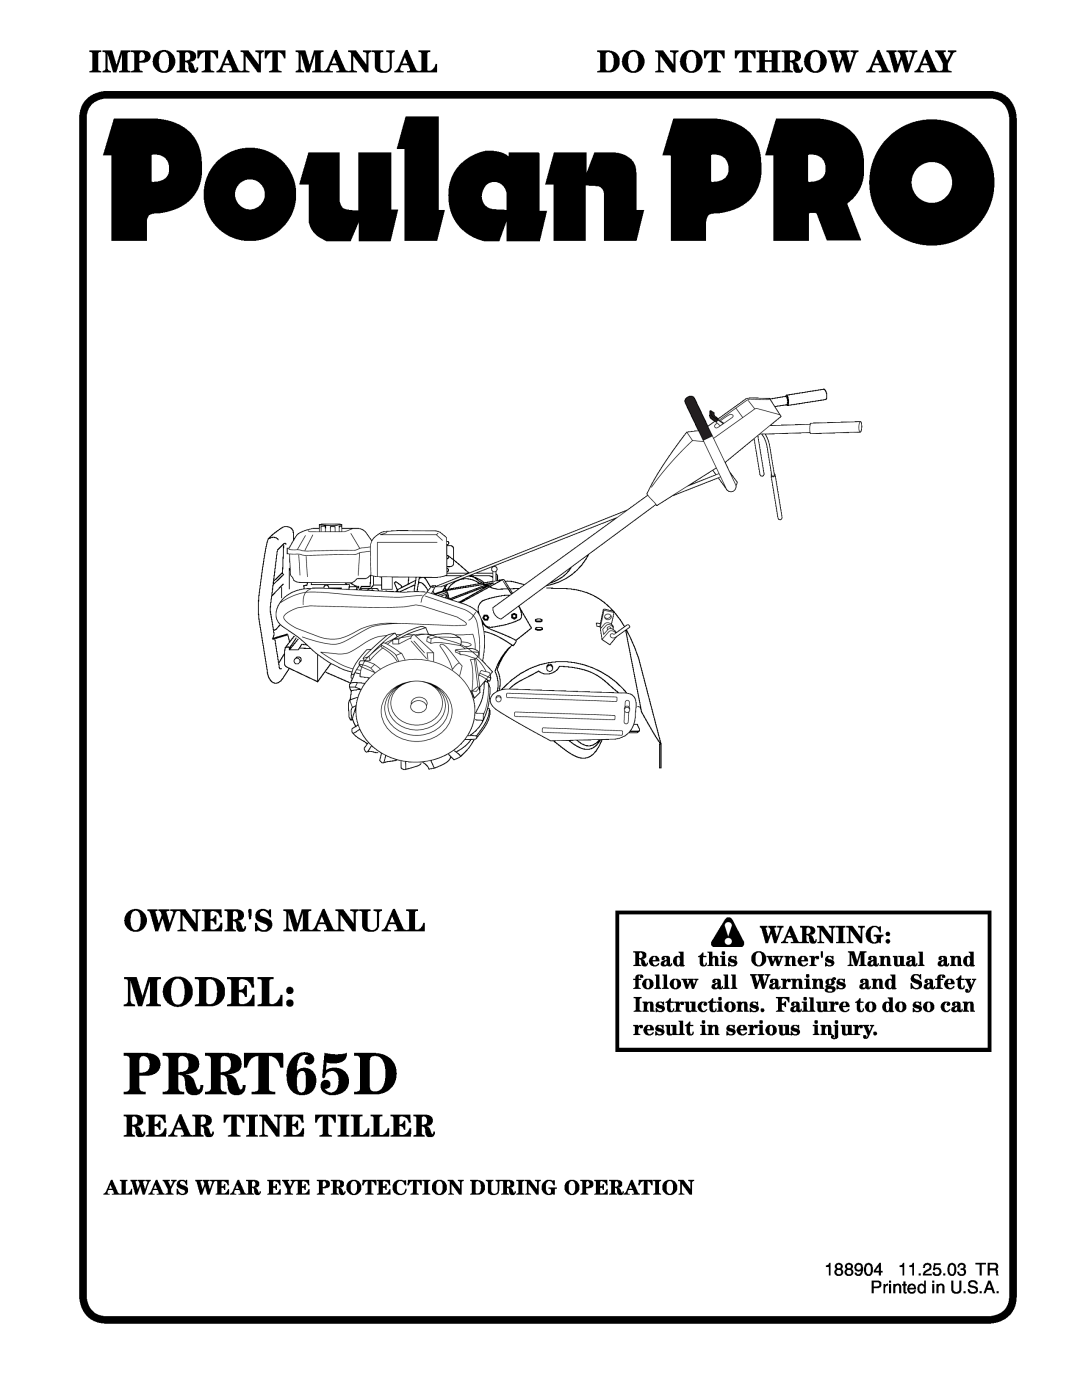 Poulan 188904 owner manual Model, PRRT65D, Important Manual, Owners Manual, Rear Tine Tiller, Do Not Throw Away 